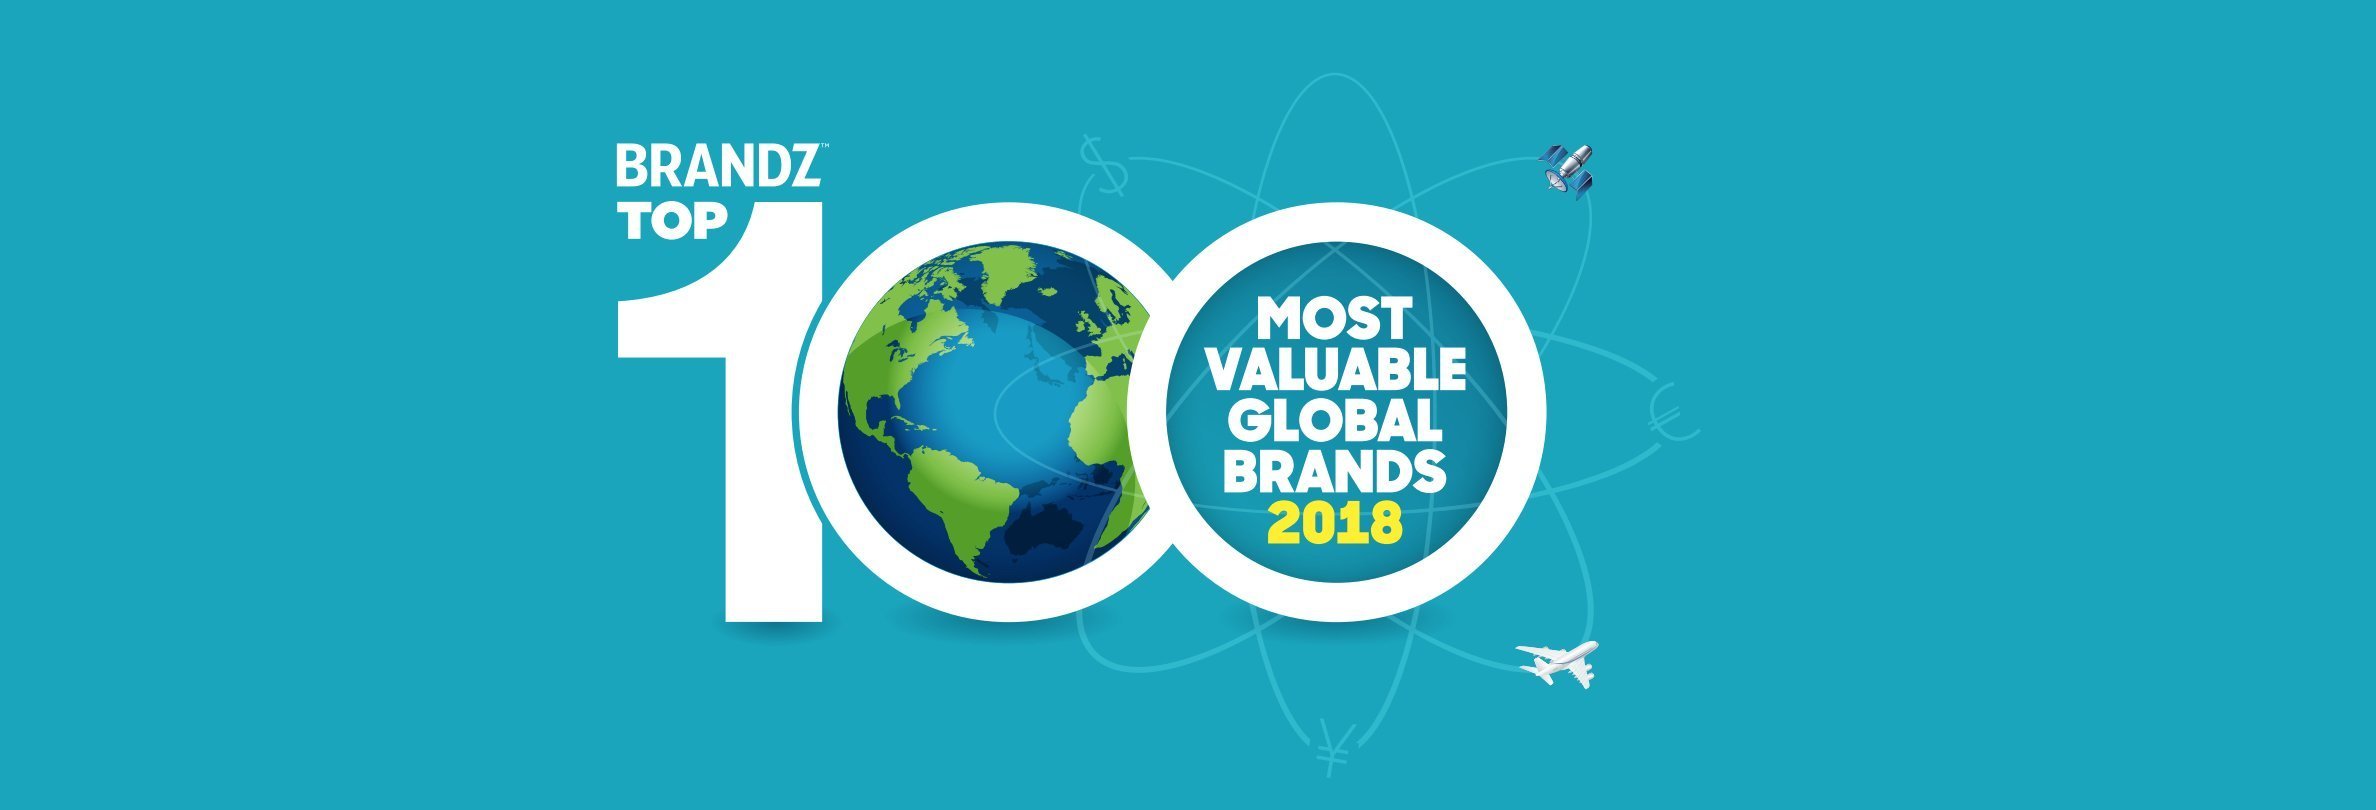 brandz_wpp kantar_rapor_BrandZ Top 100 Most Valuable Global Brands_ bigumigu_6